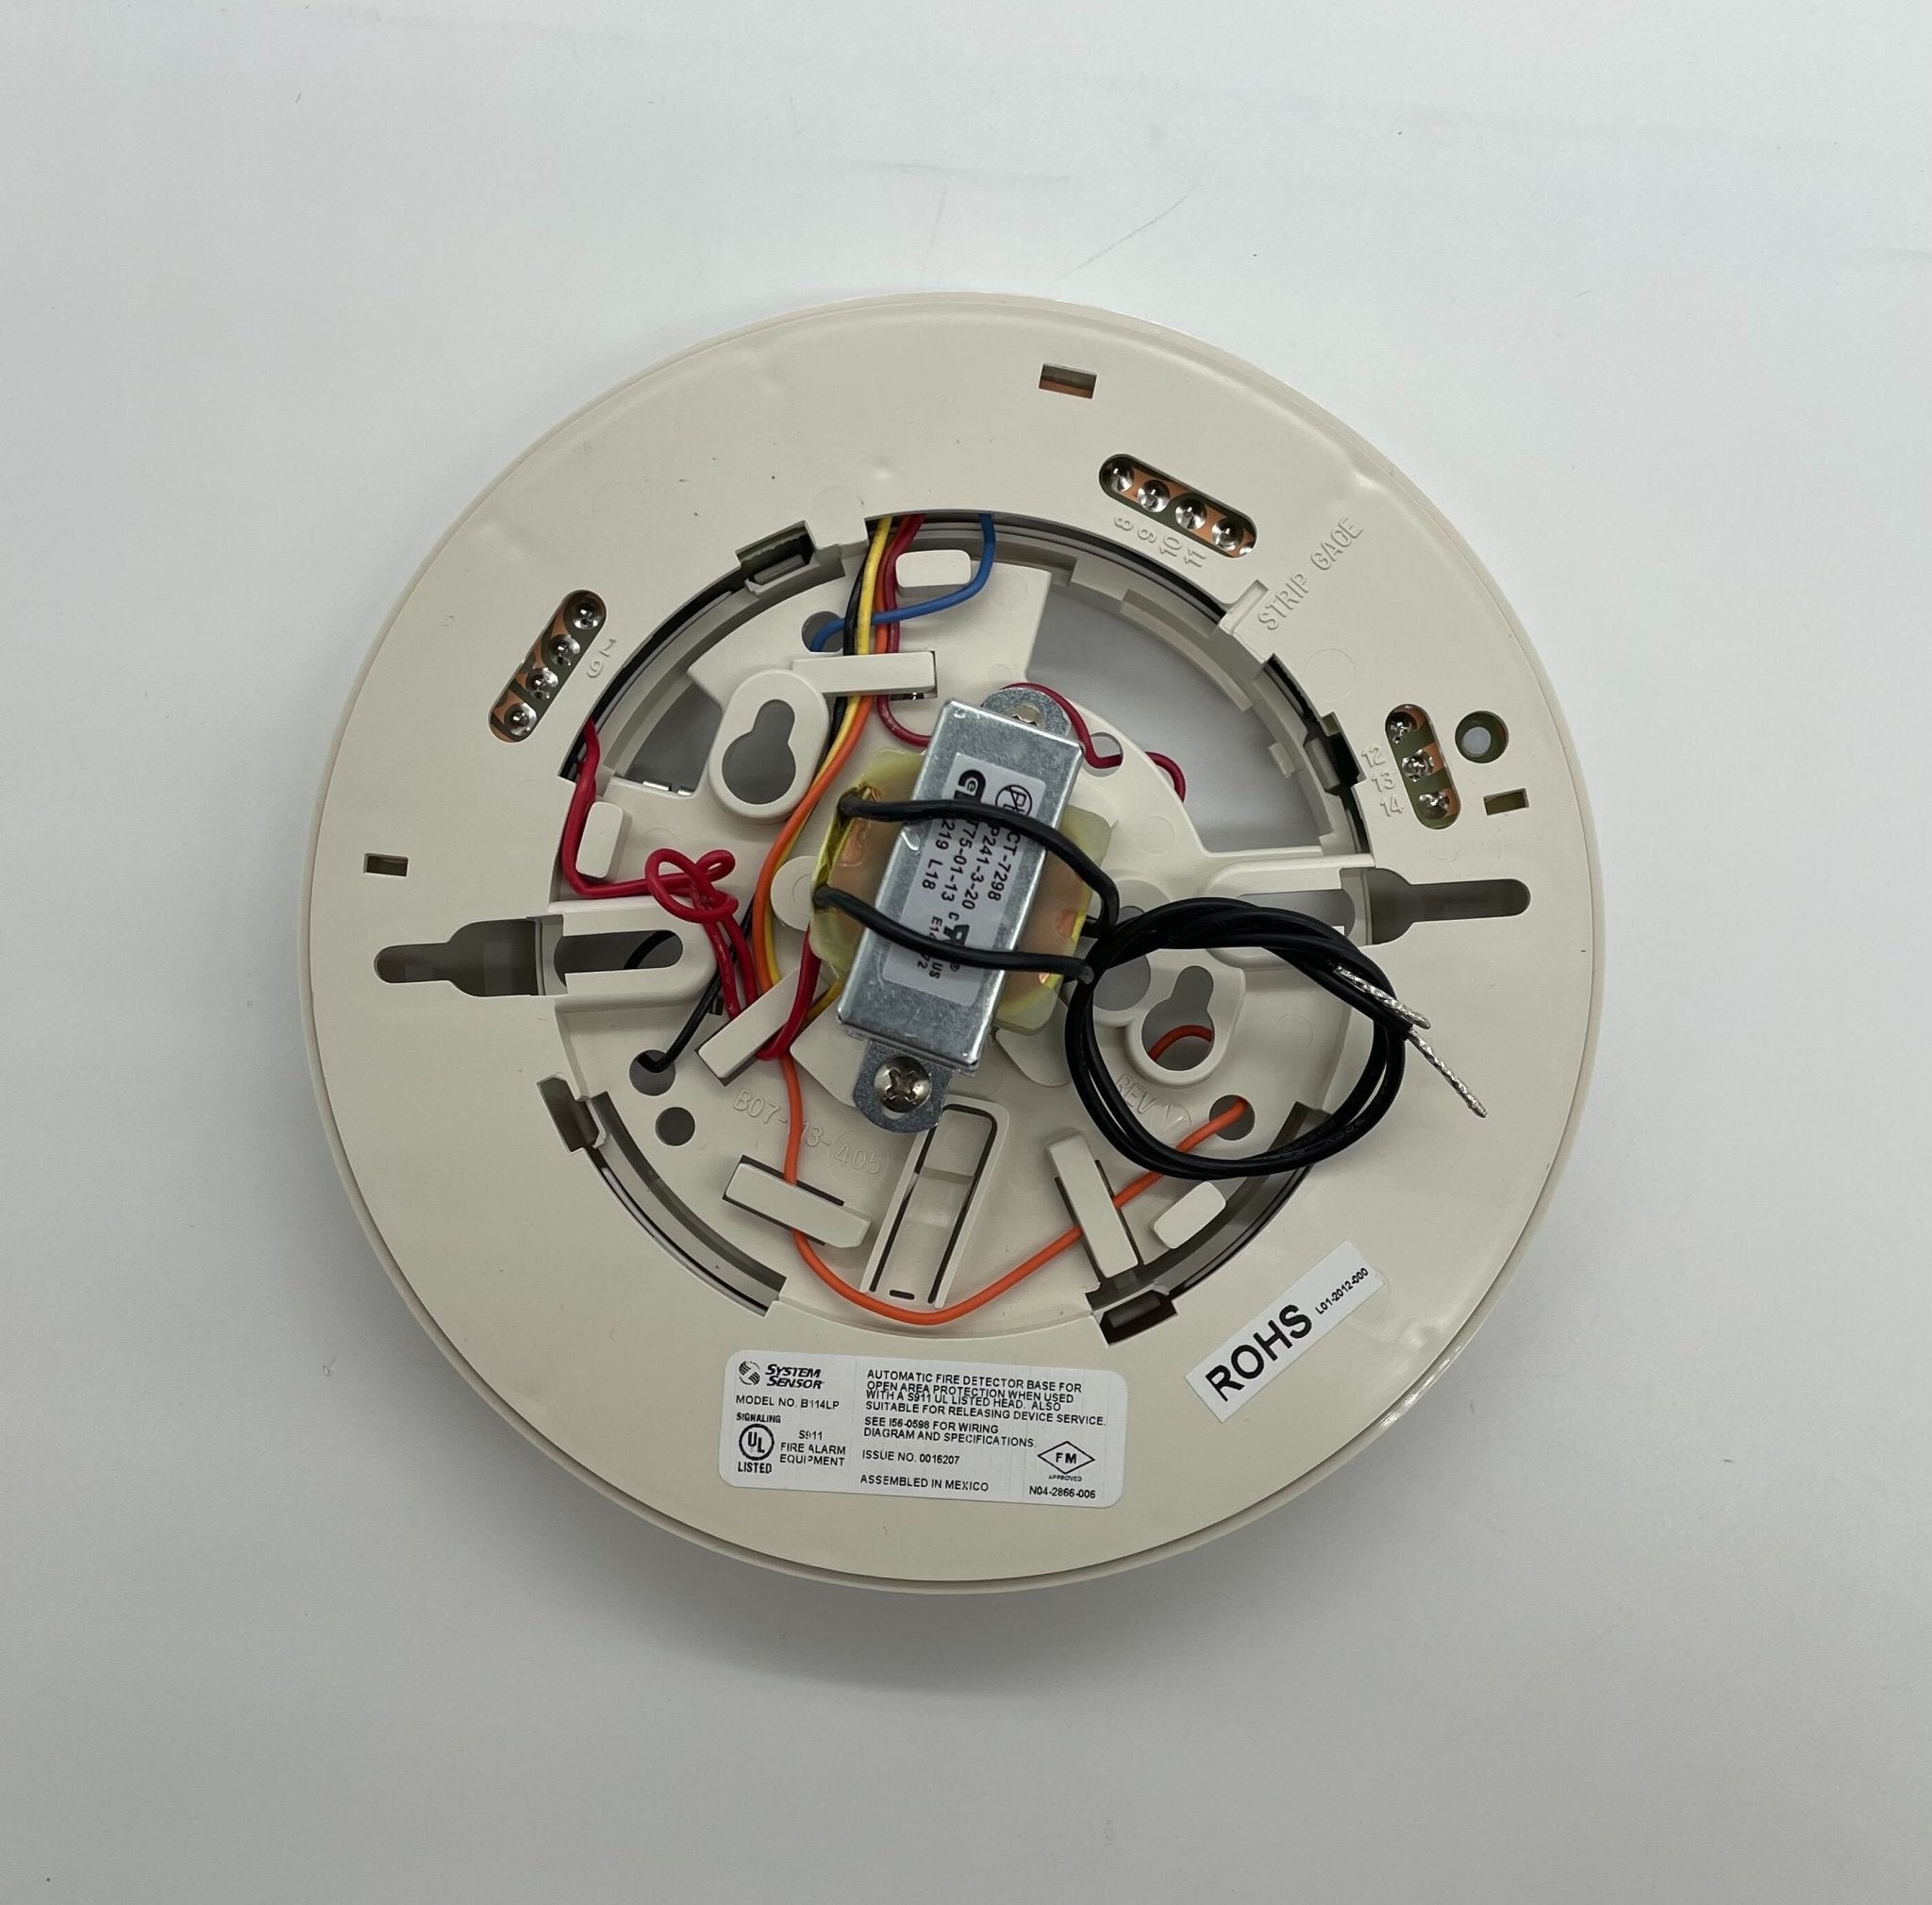 System Sensor B114LP - The Fire Alarm Supplier